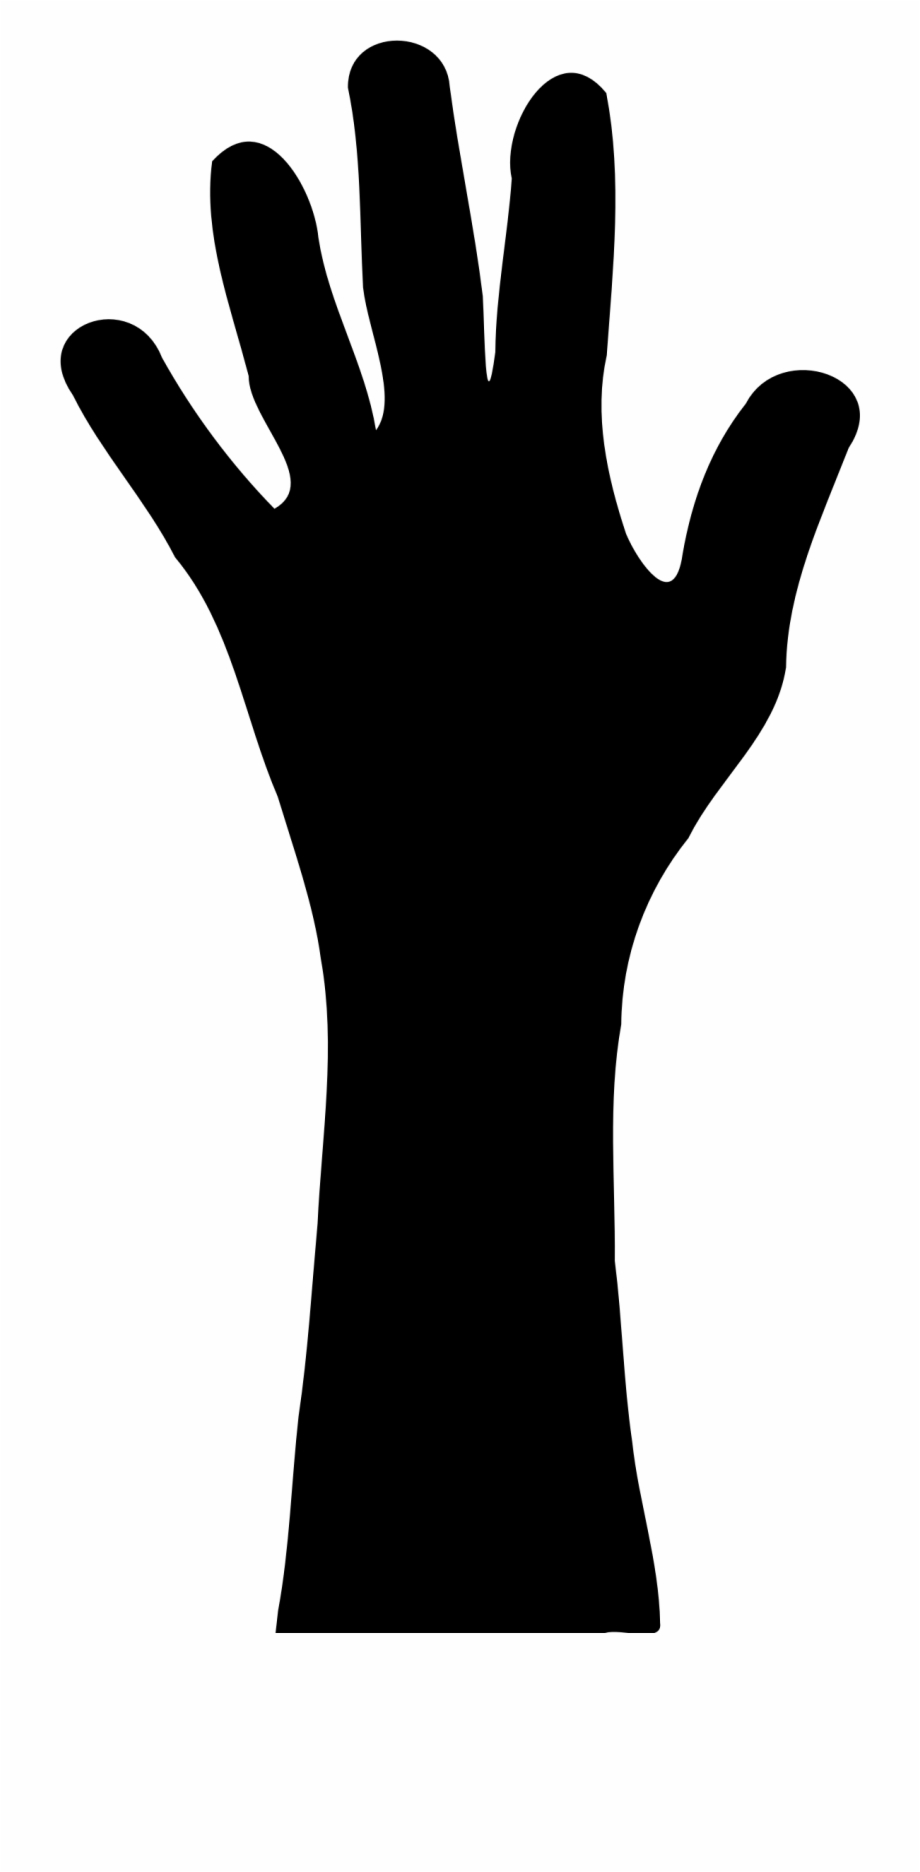 silhouette hand raised
